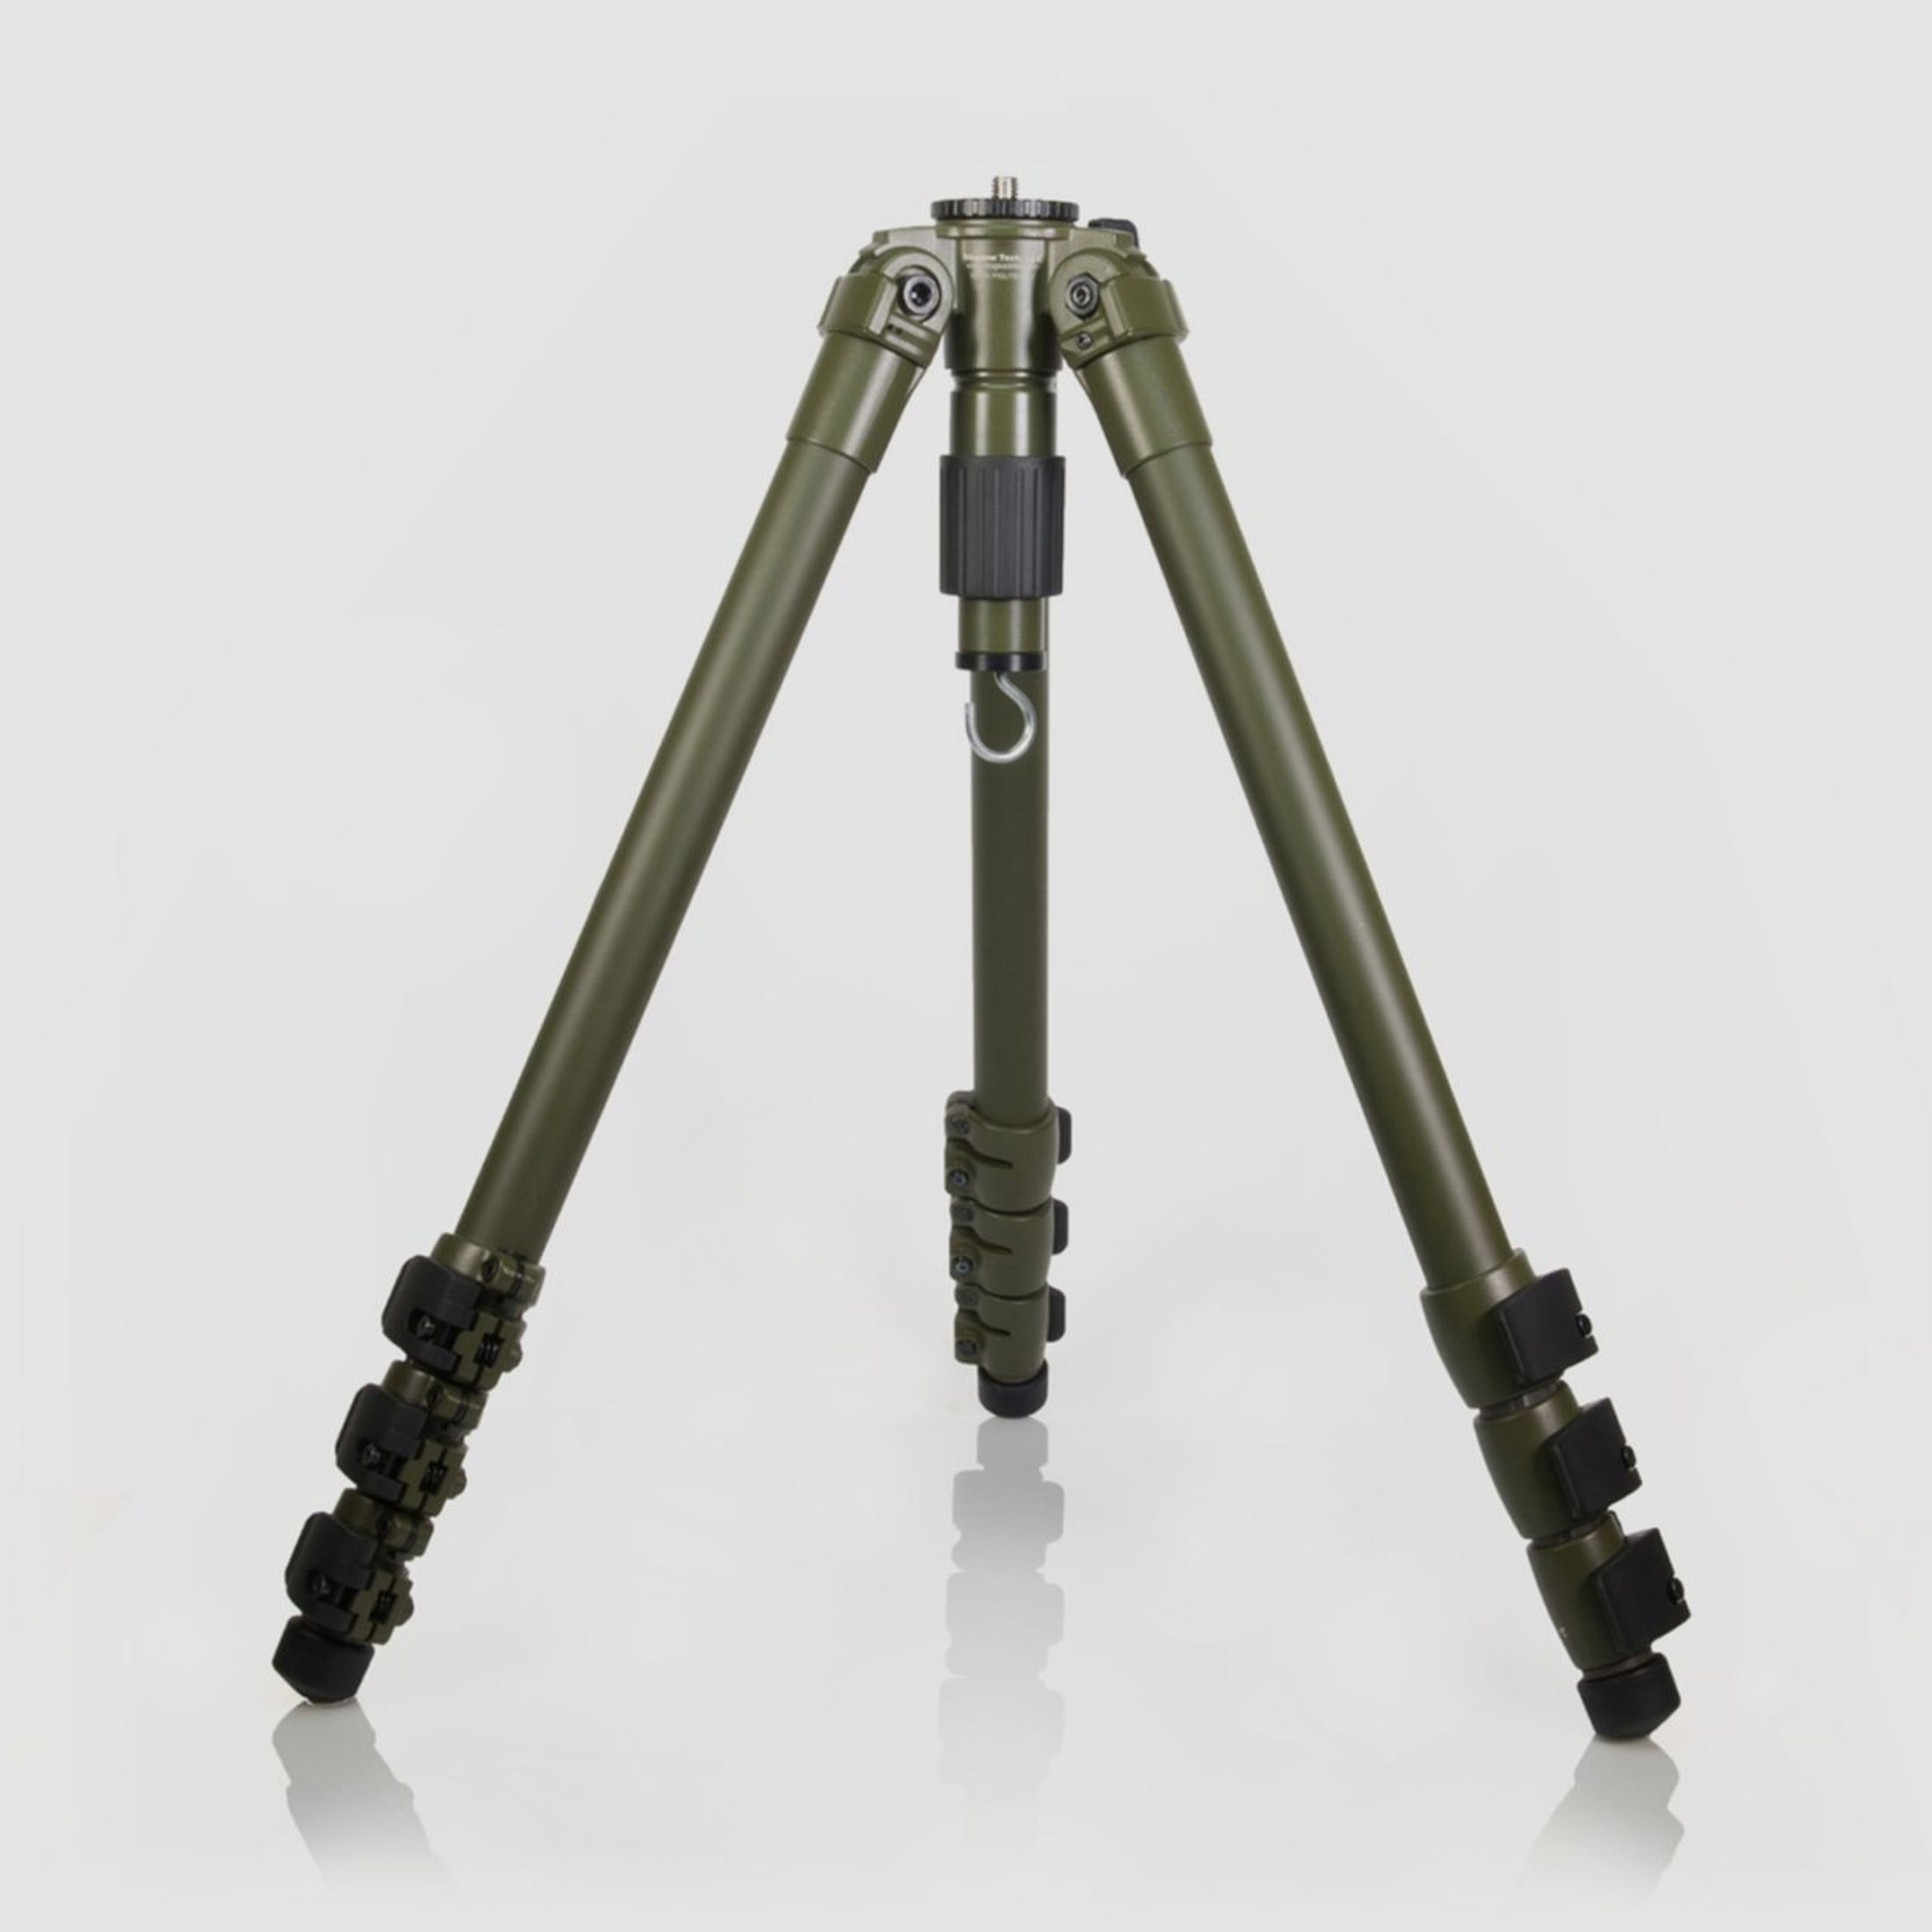 Shadowtech PIGLITE CF4 Gewehr Stativ - Field Quadpod Sniper / Rifle Rest